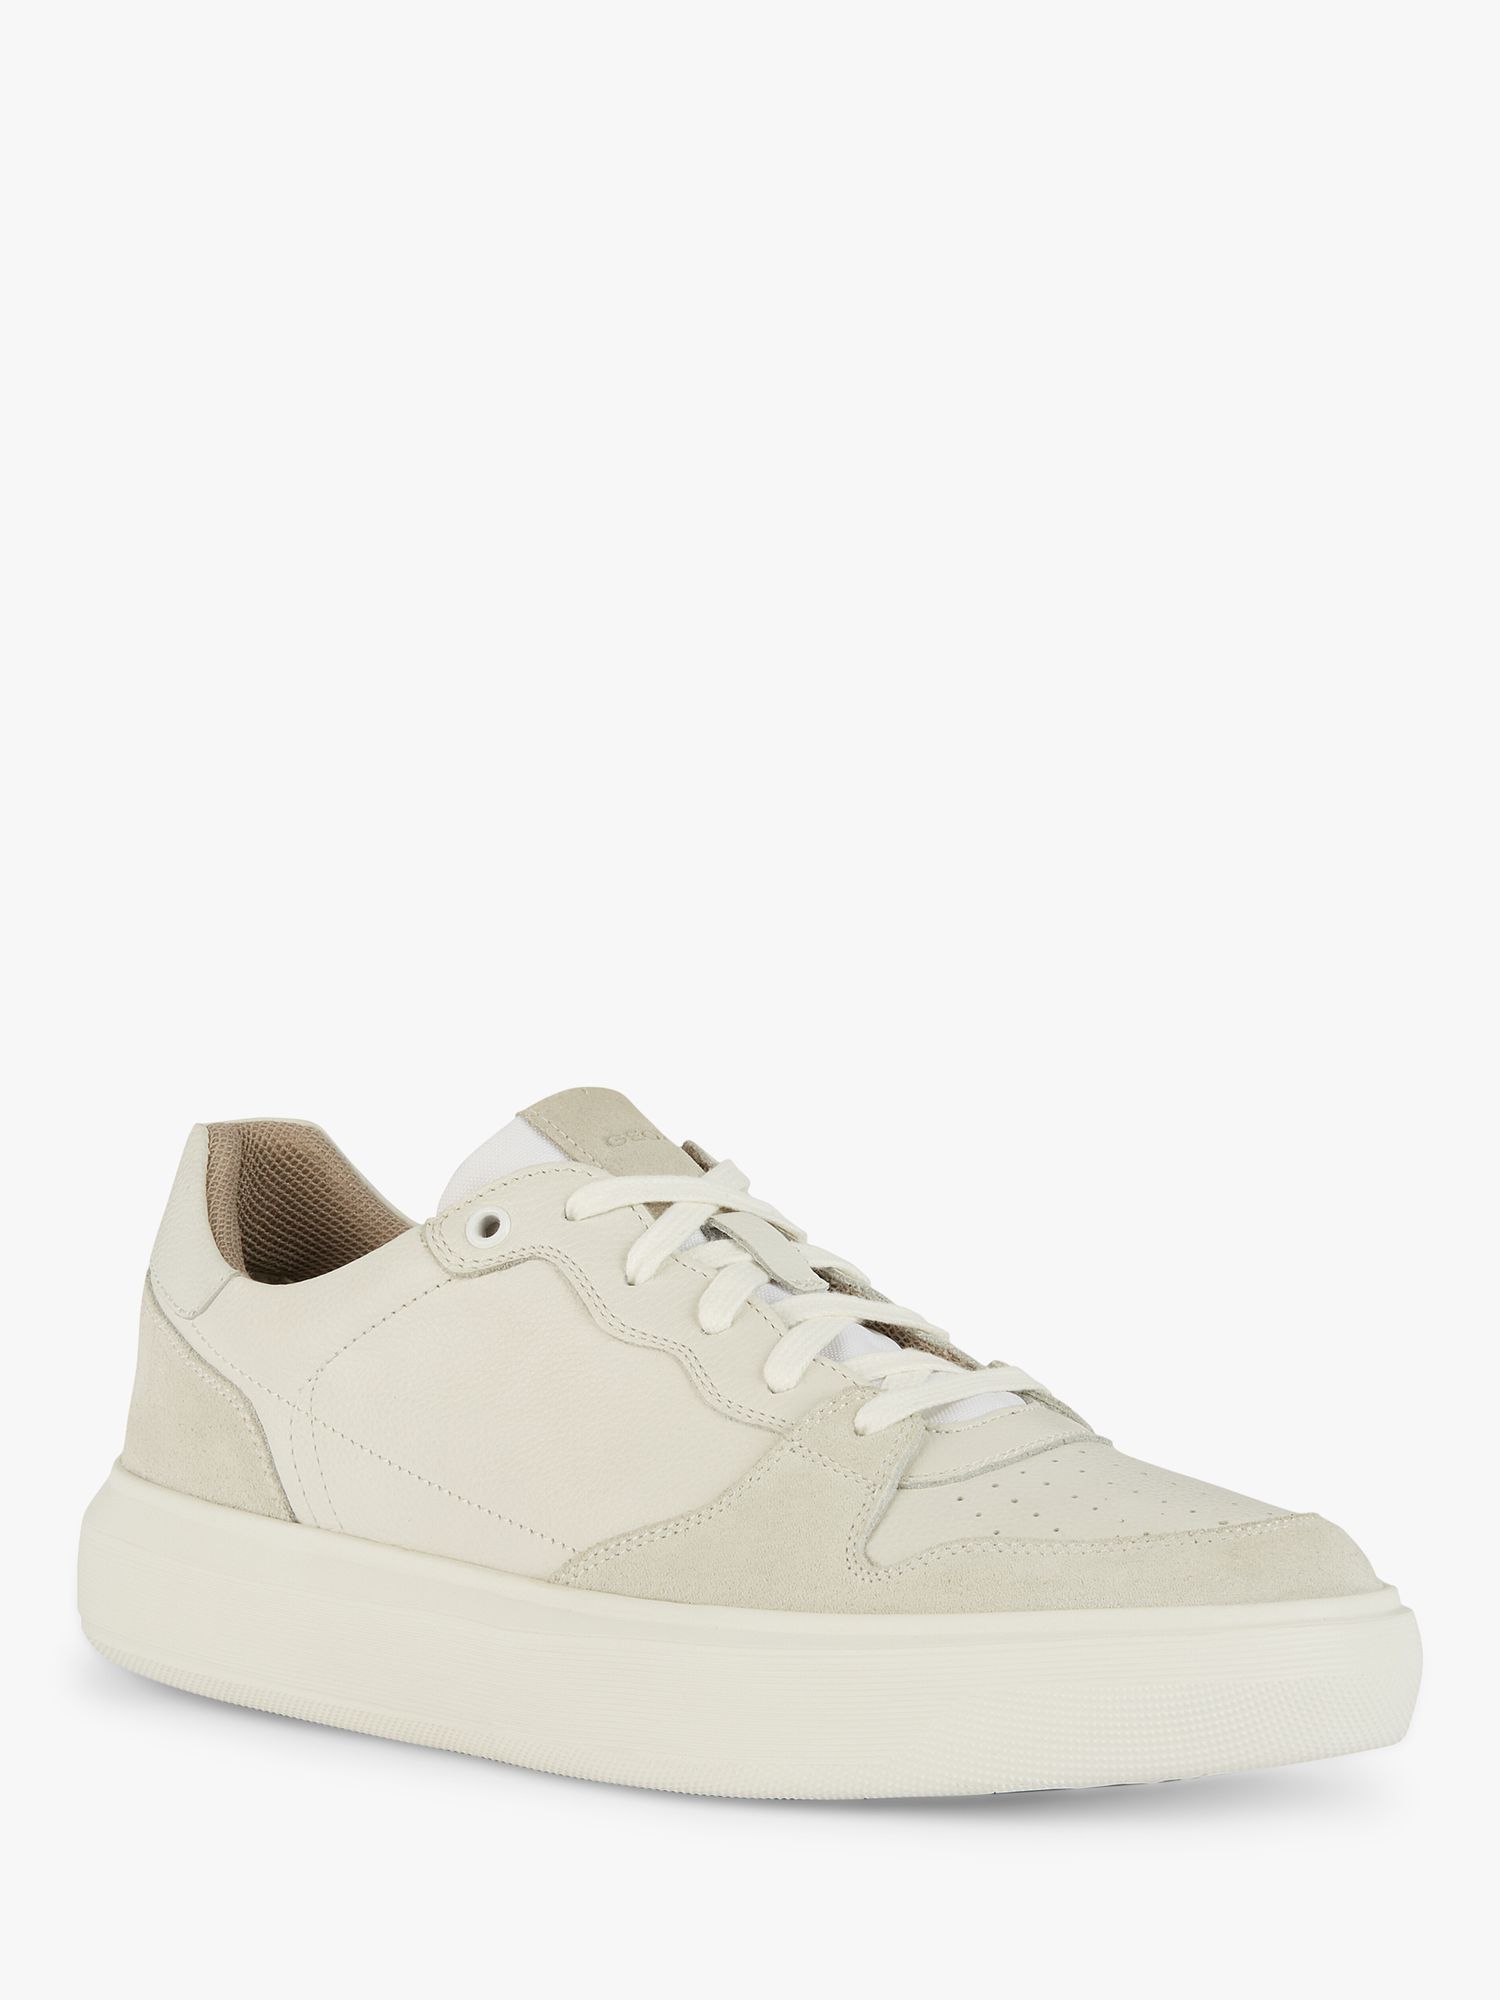 Geox Deiven Low Cut Sneakers, White, EU41